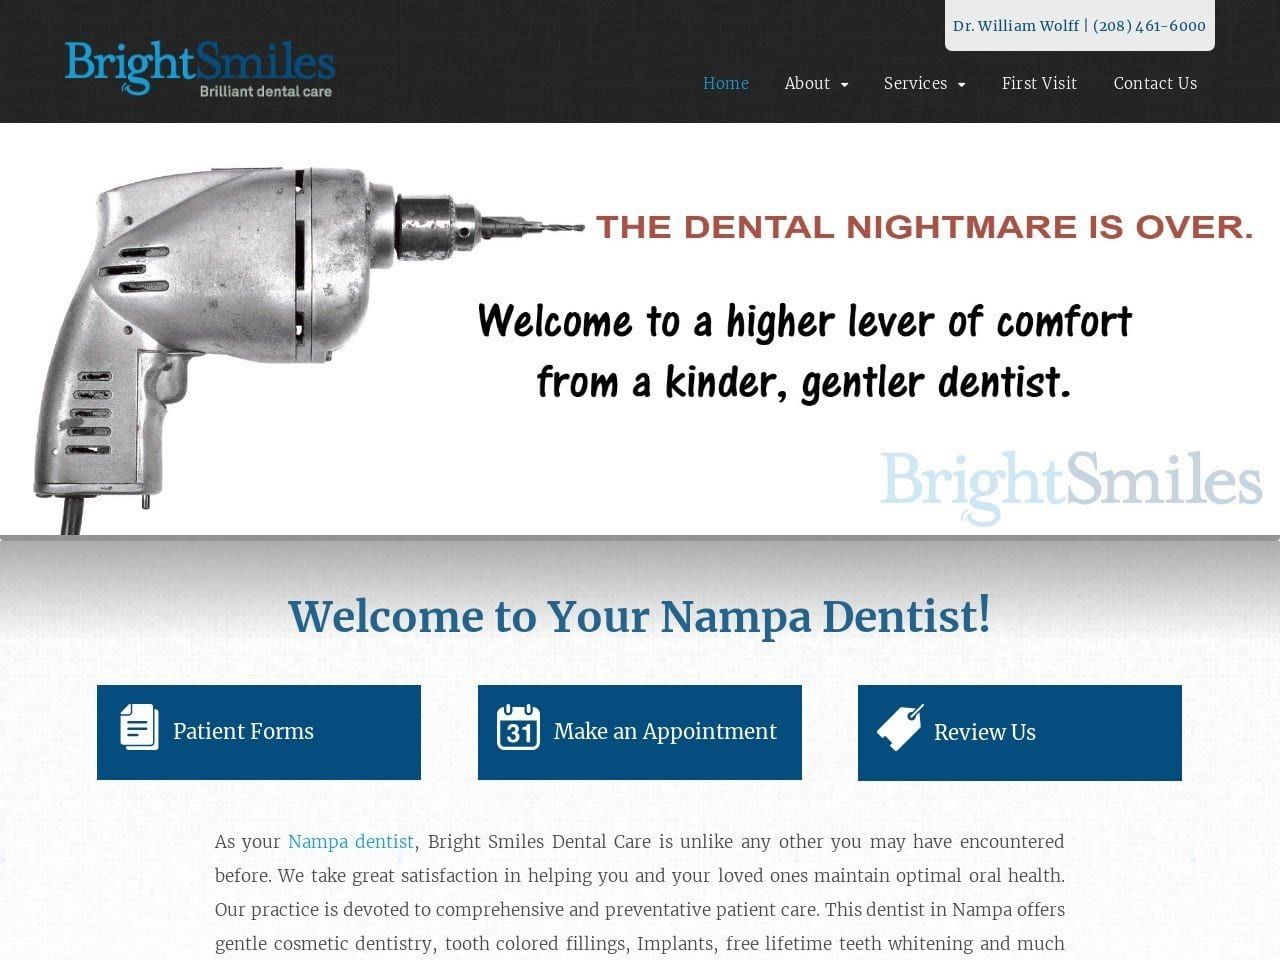 Bright Smiles Dental Care Website Screenshot from mybrightsmiles.com